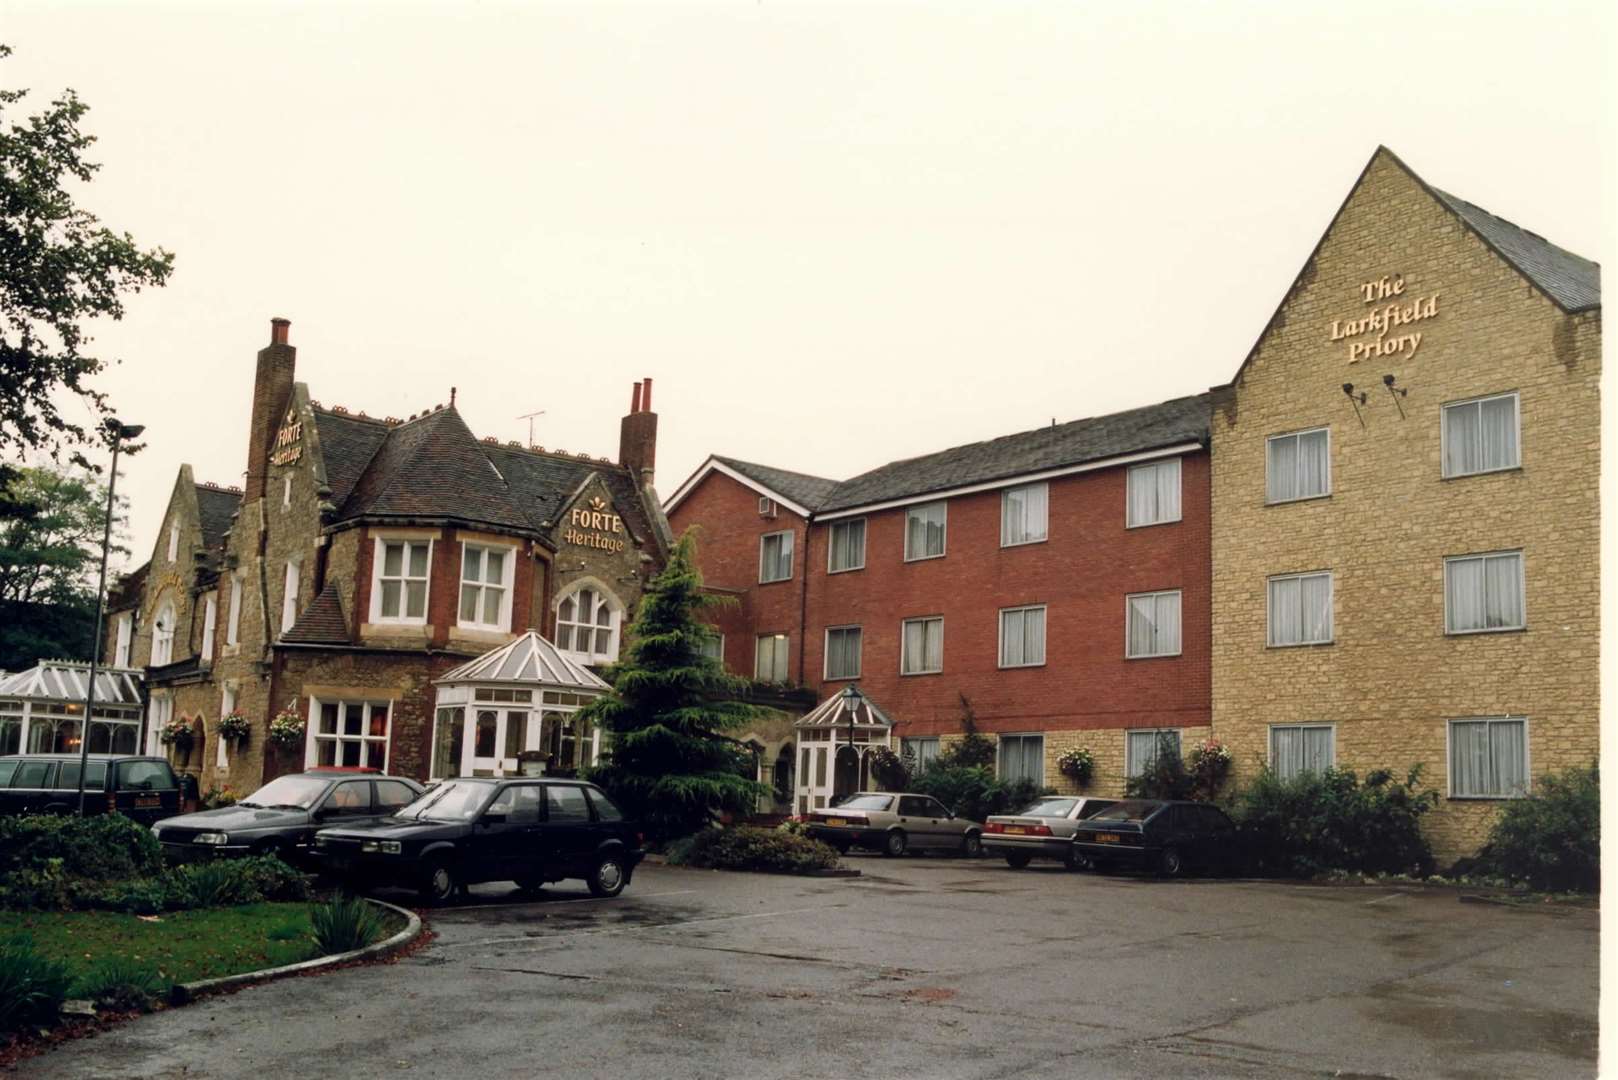 The Larkfield Priory, in London Road, Larkfield